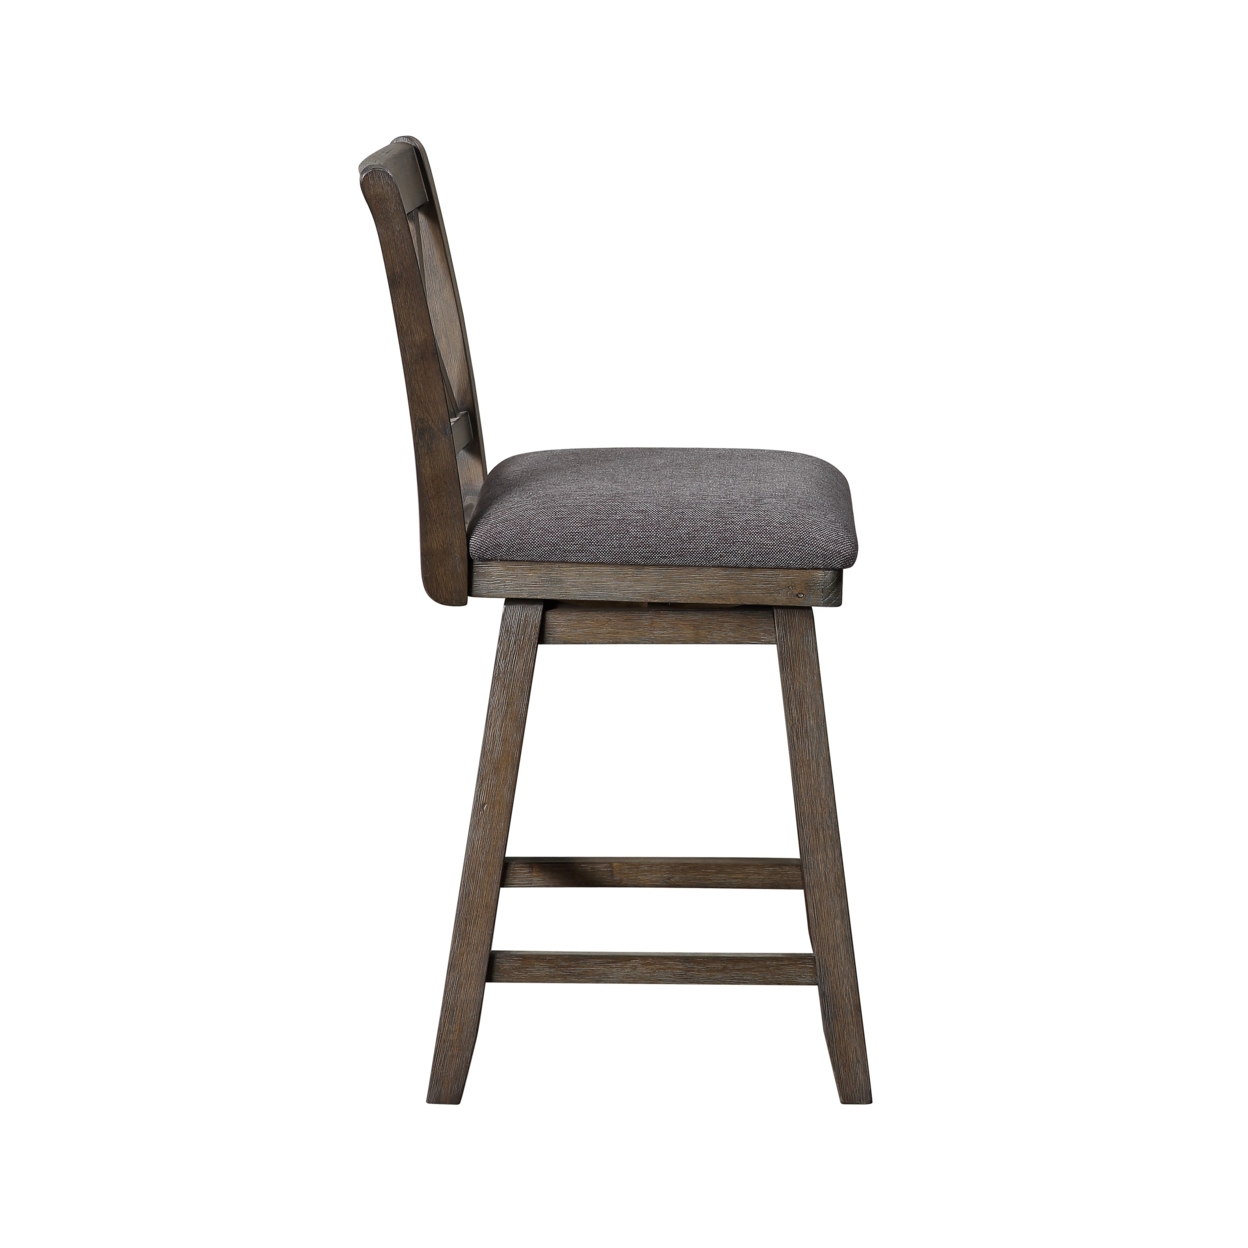 Jasmine 24 Handcrafted Rustic 360 Degree Swivel Counter Stool Chair, Distressed Walnut Brown, Gray Seat Cushion- Saltoro Sherpi